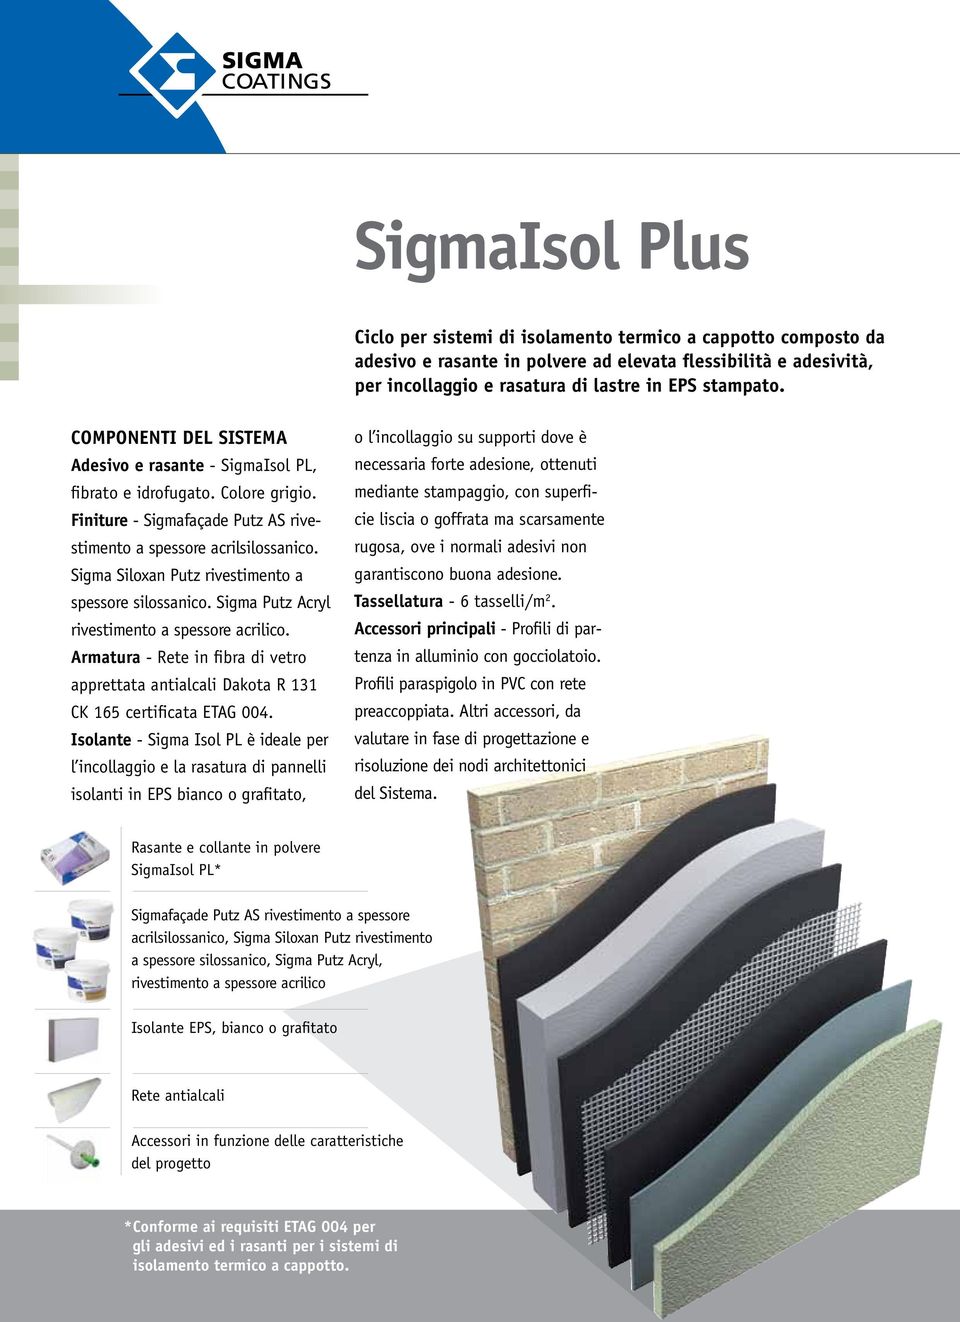 Sigma Siloxan Putz rivestimento a spessore silossanico. Sigma Putz Acryl rivestimento a spessore acrilico.